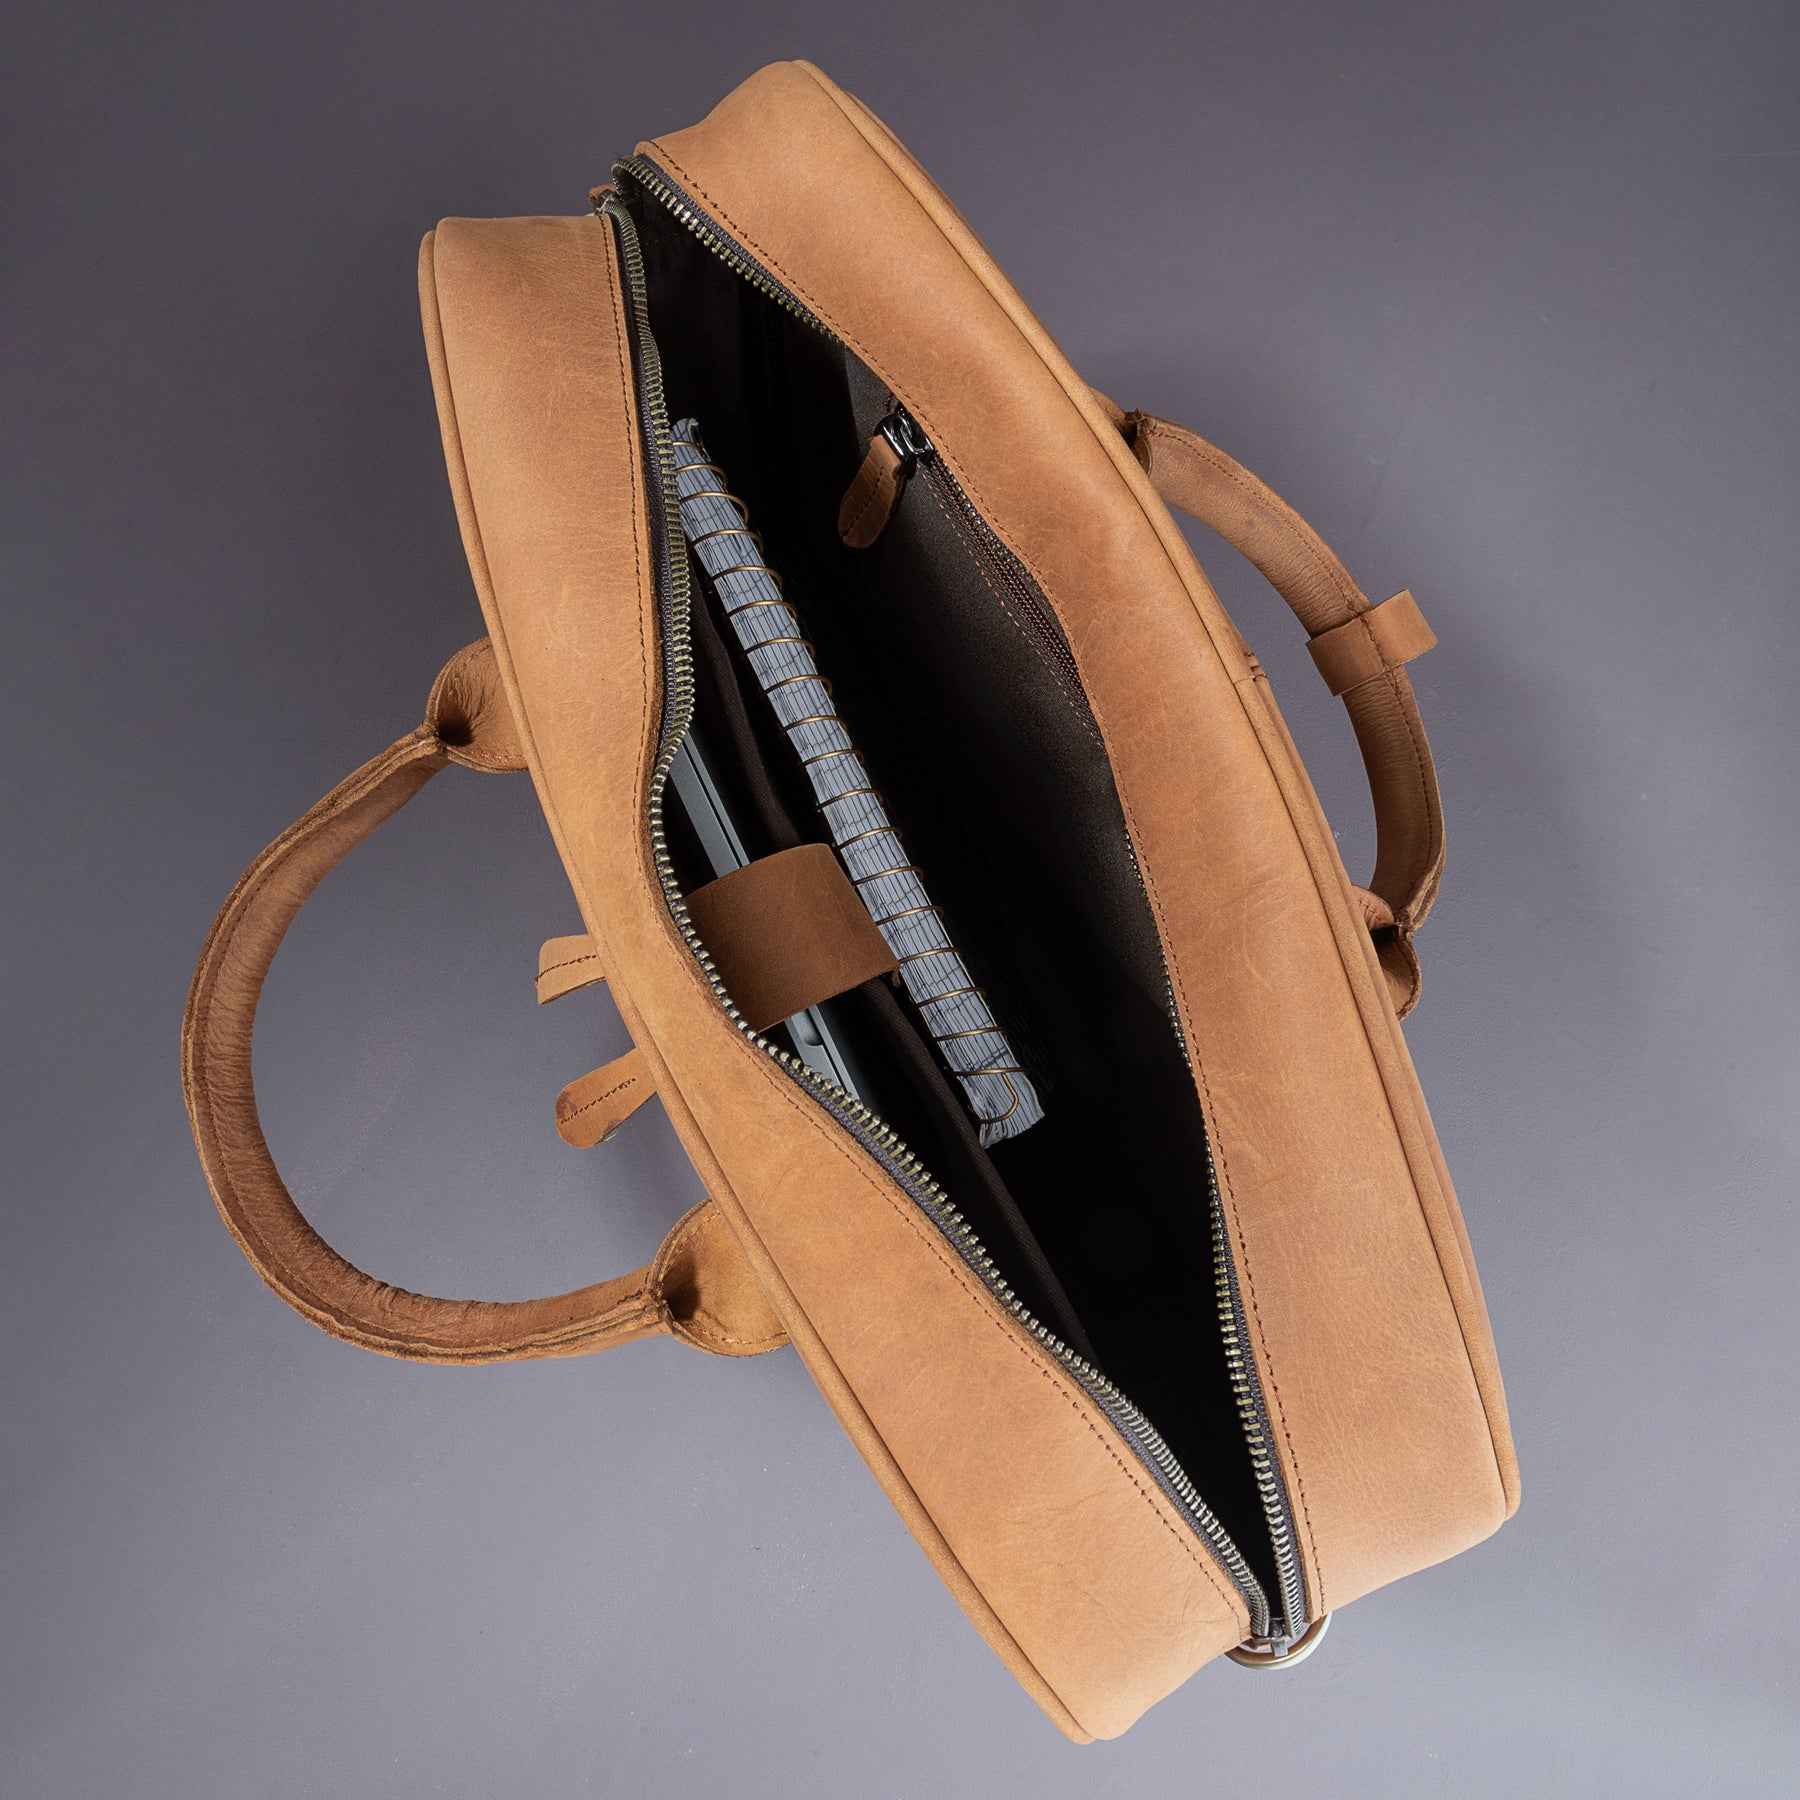 Royal Arch Chapter Briefcase - Handmade Leather - Bricks Masons